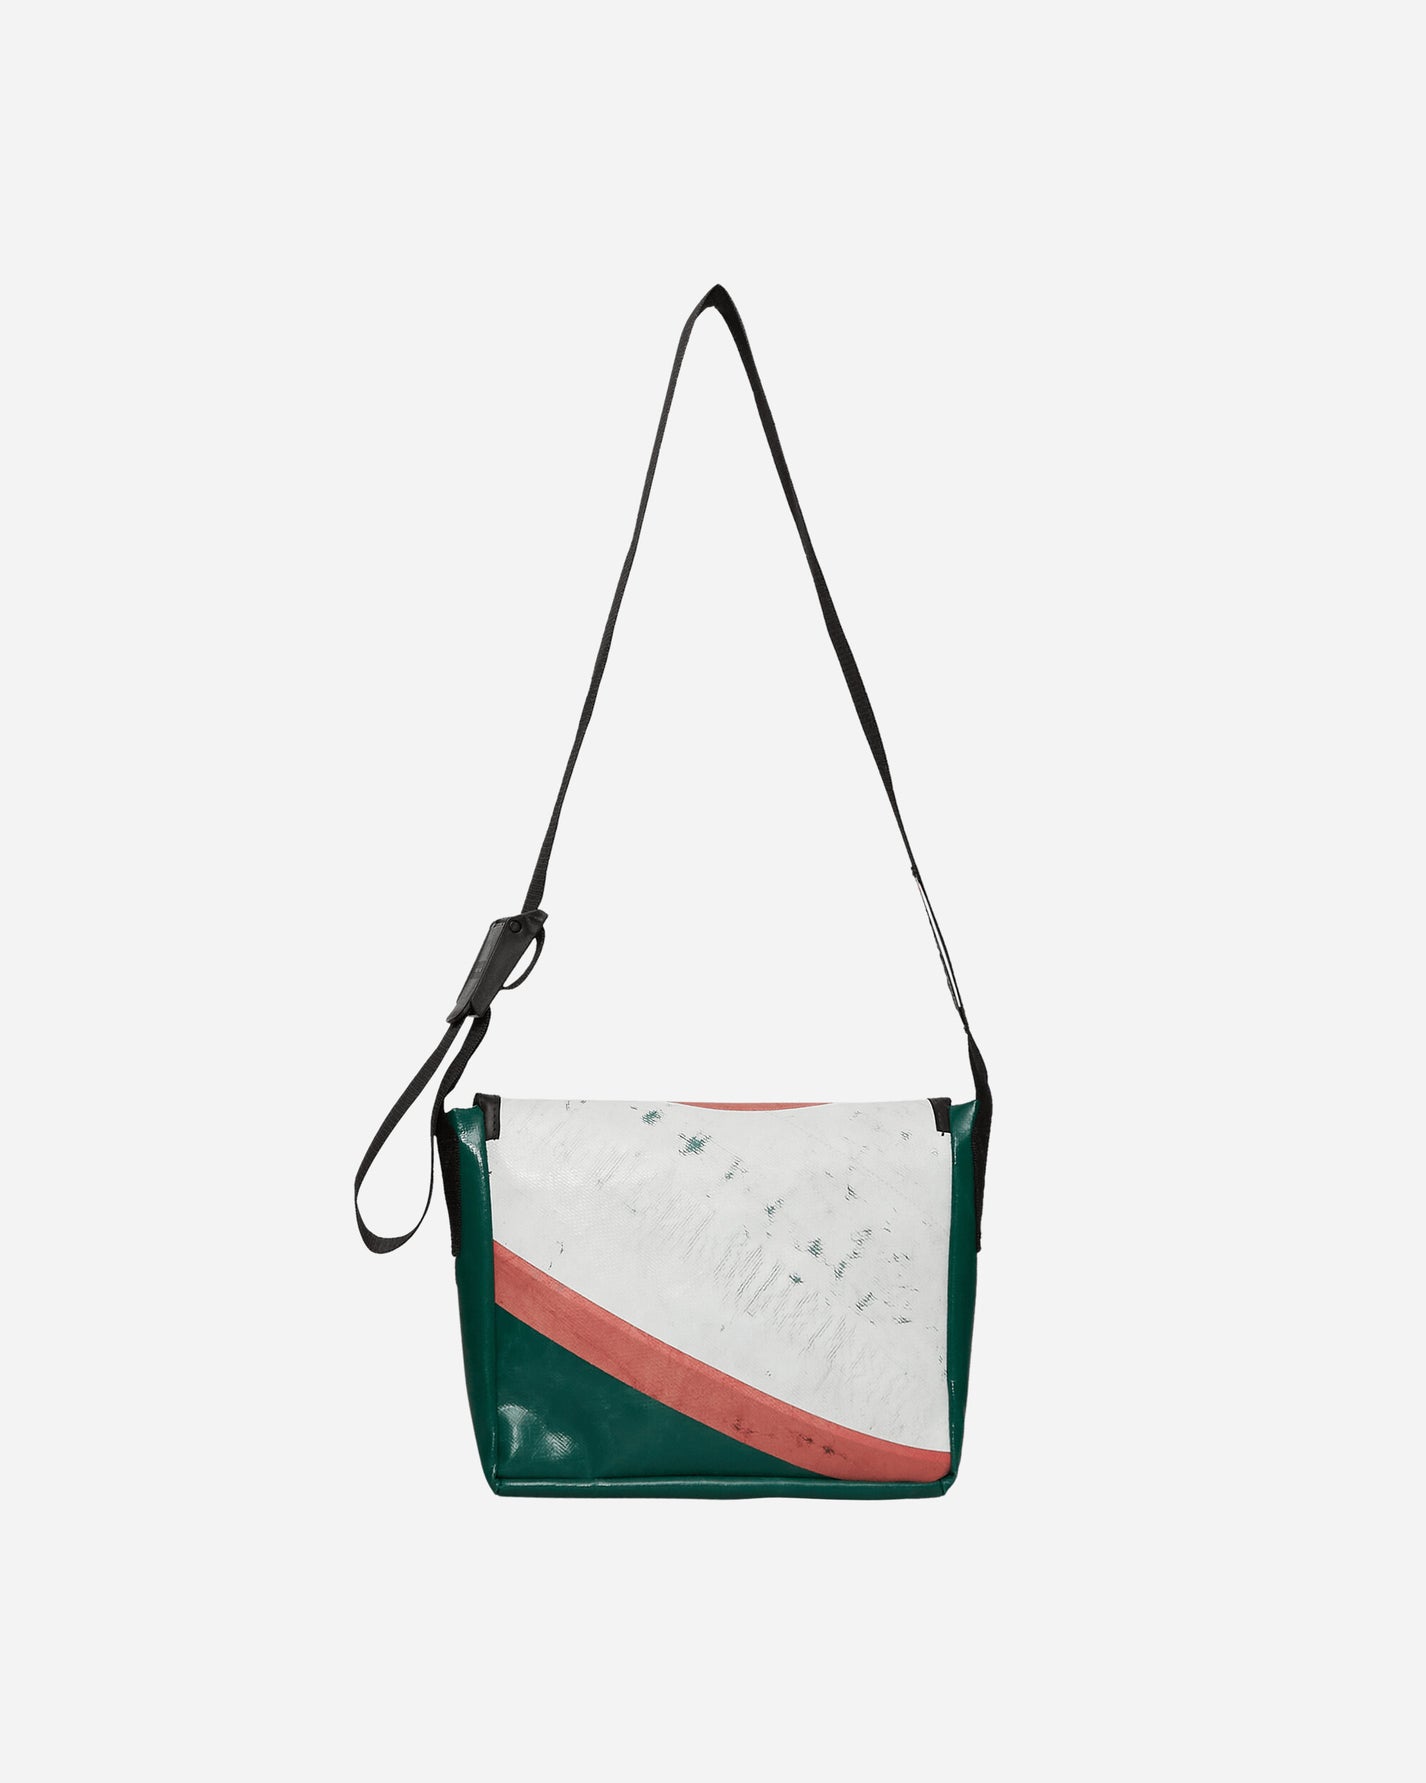 Freitag Lassie Multi Bags and Backpacks Shoulder Bags FREITAGF11 009